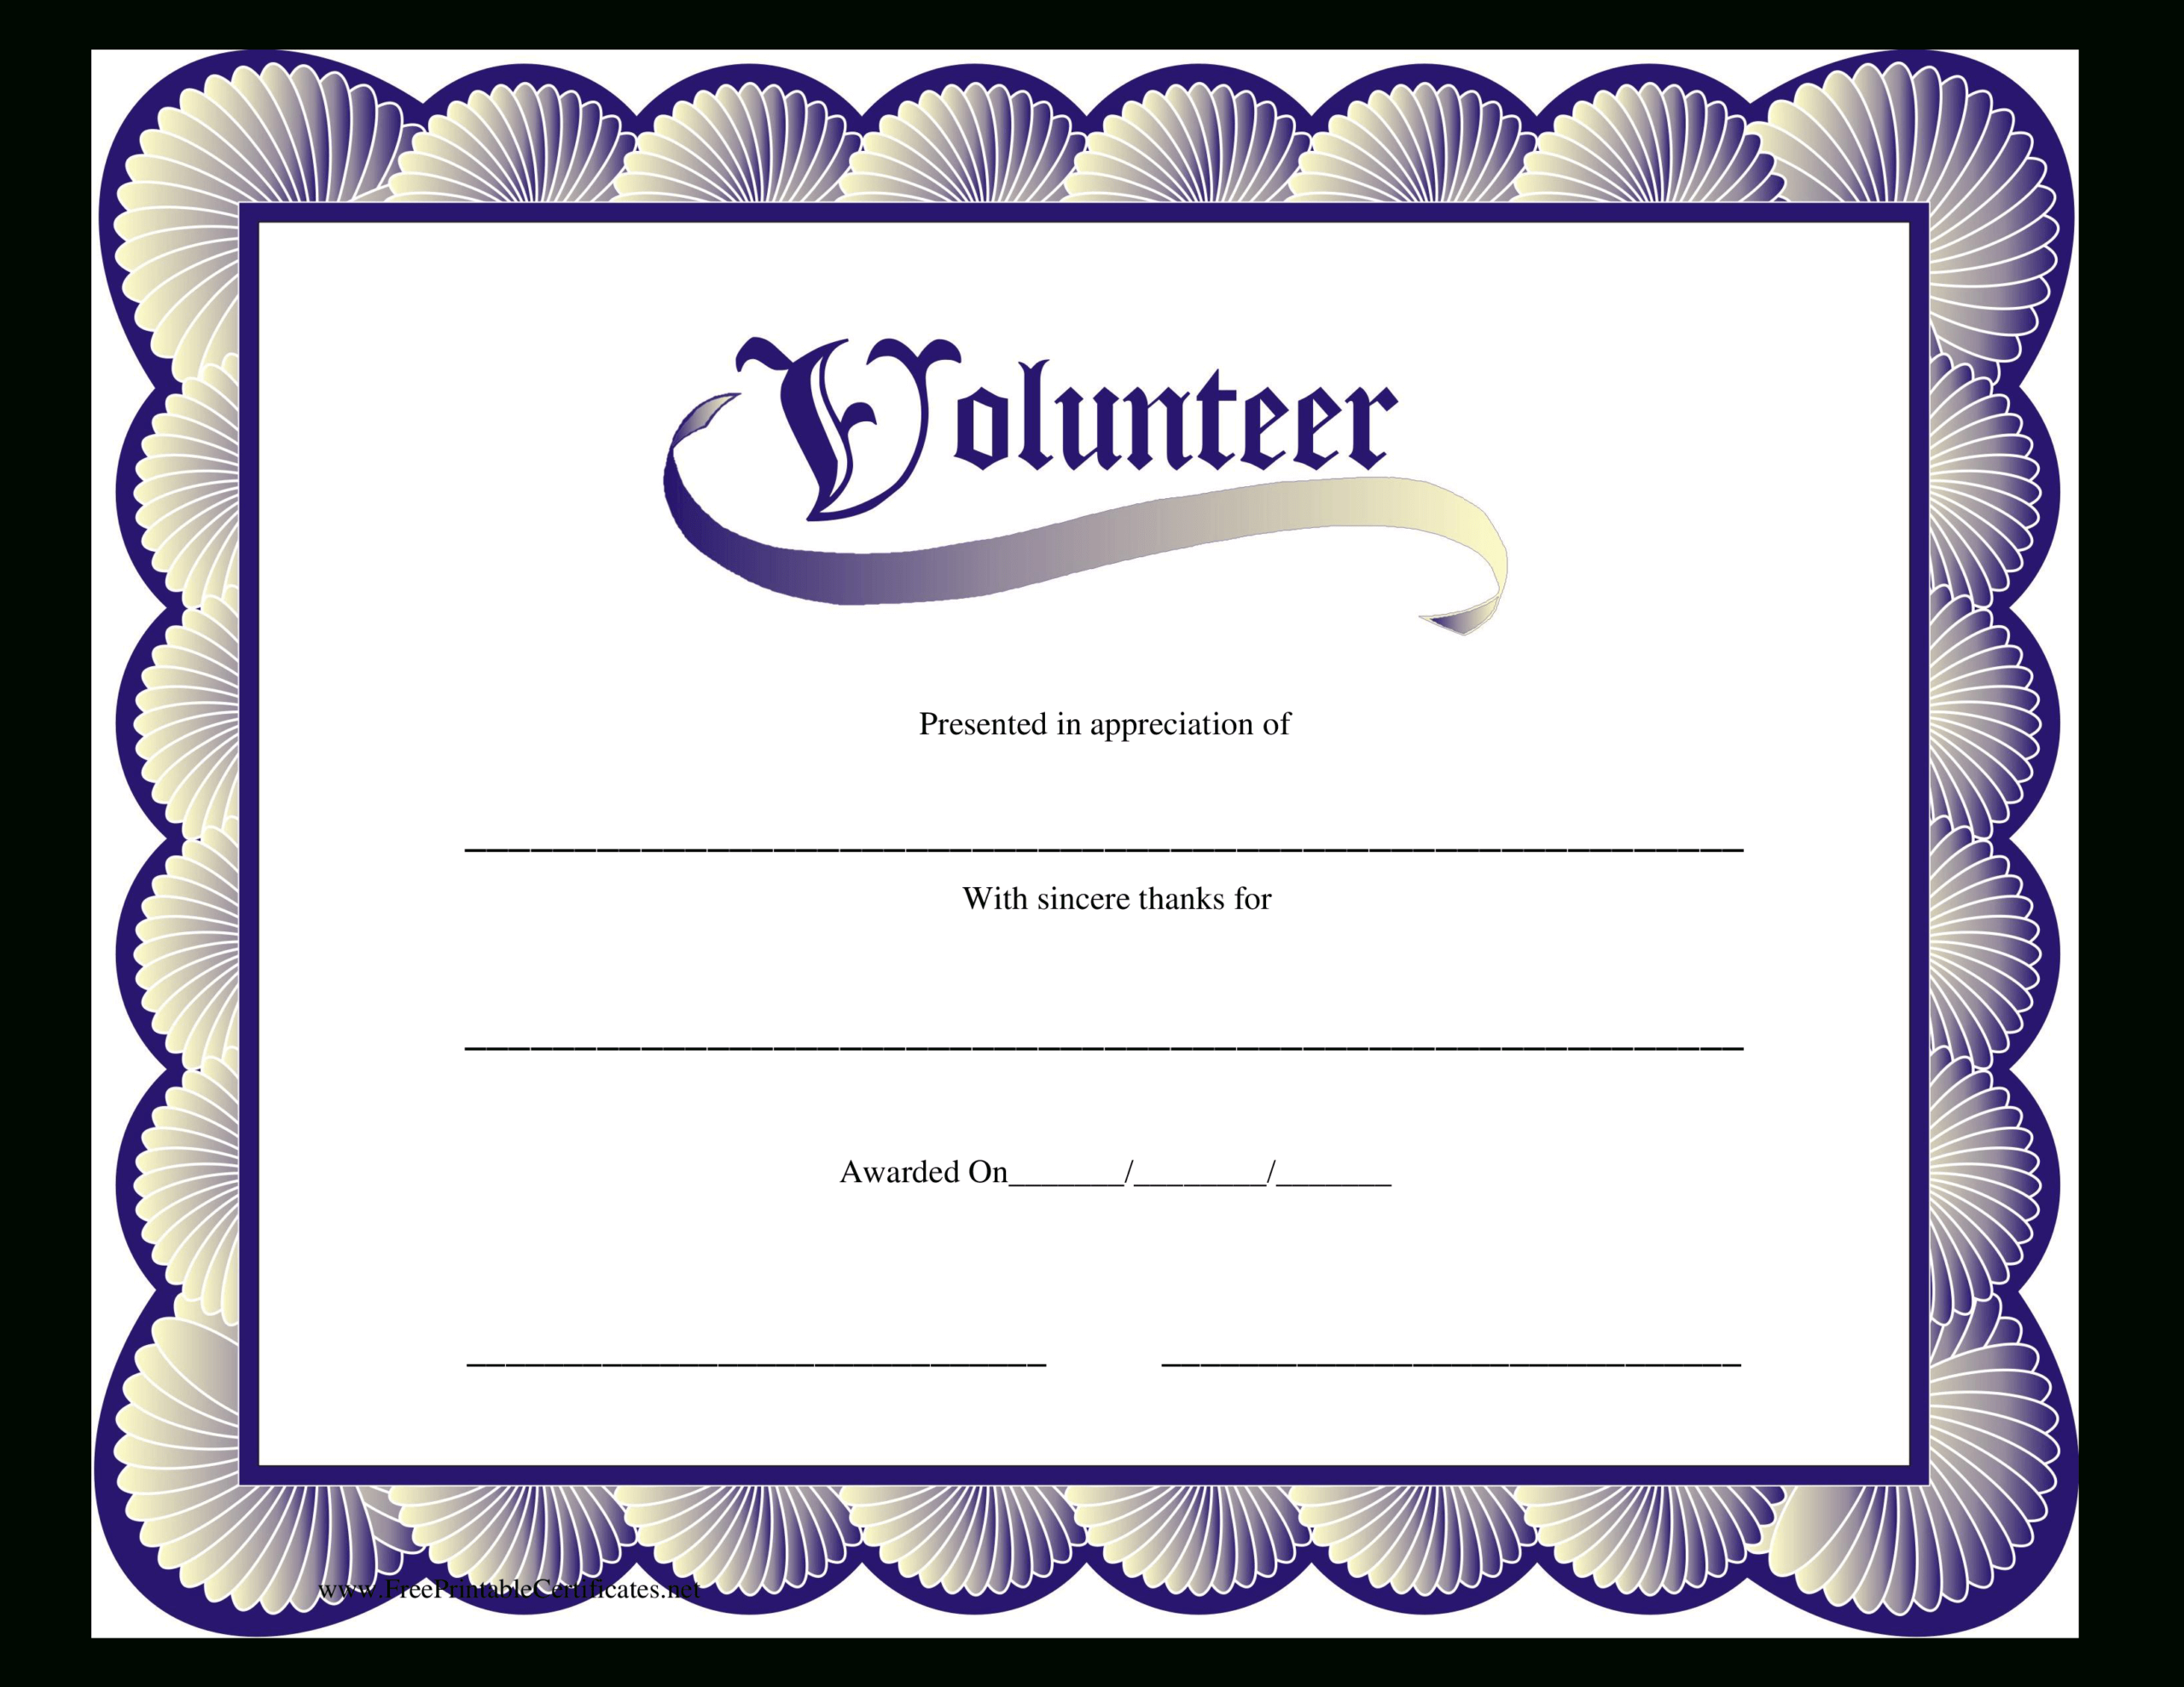 Volunteer Certificate | Templates At Allbusinesstemplates For Volunteer Award Certificate Template